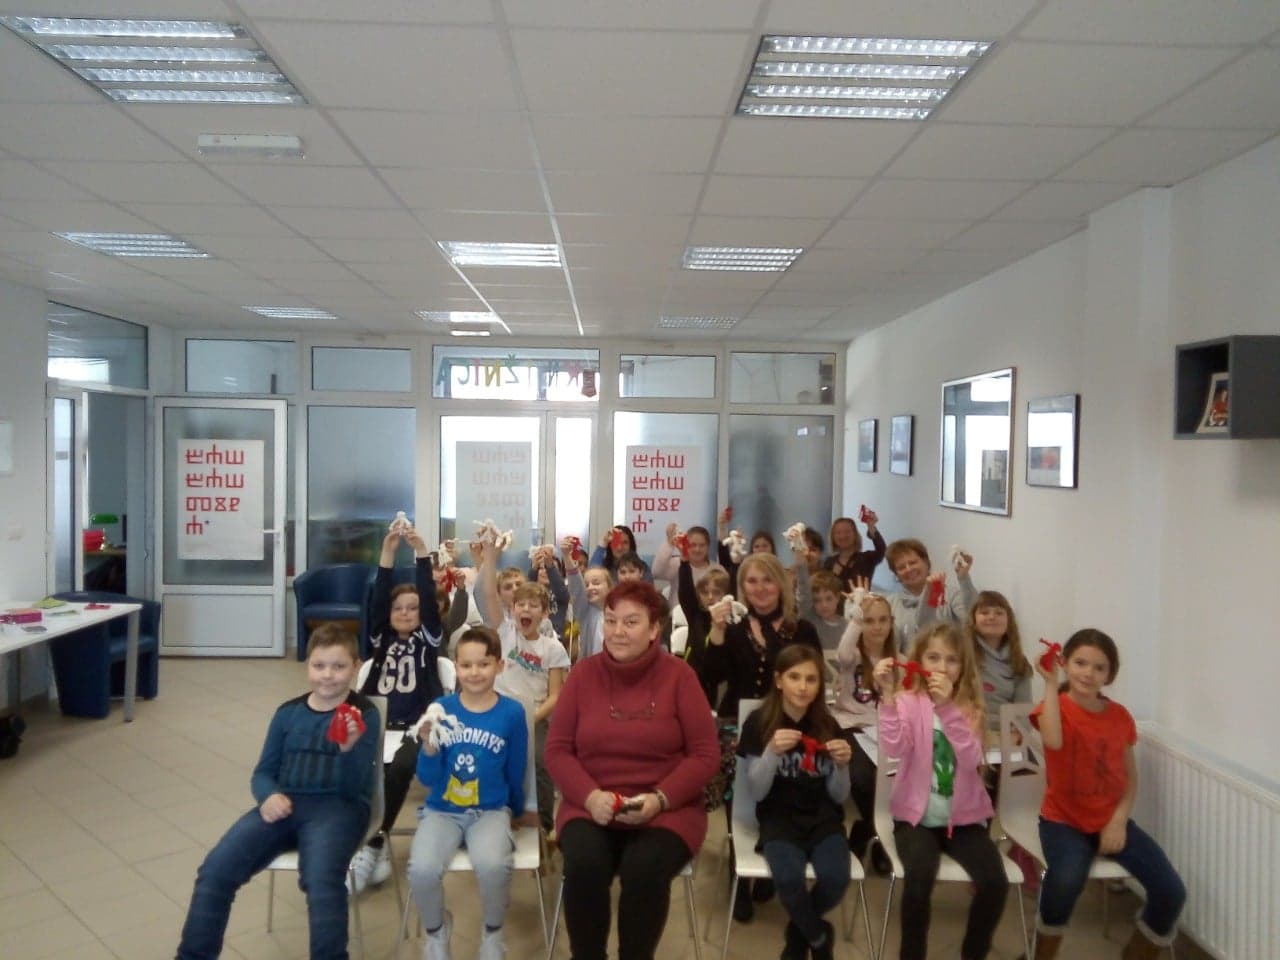 Jezične igre na bugarski način oduševile male Đurđevčane